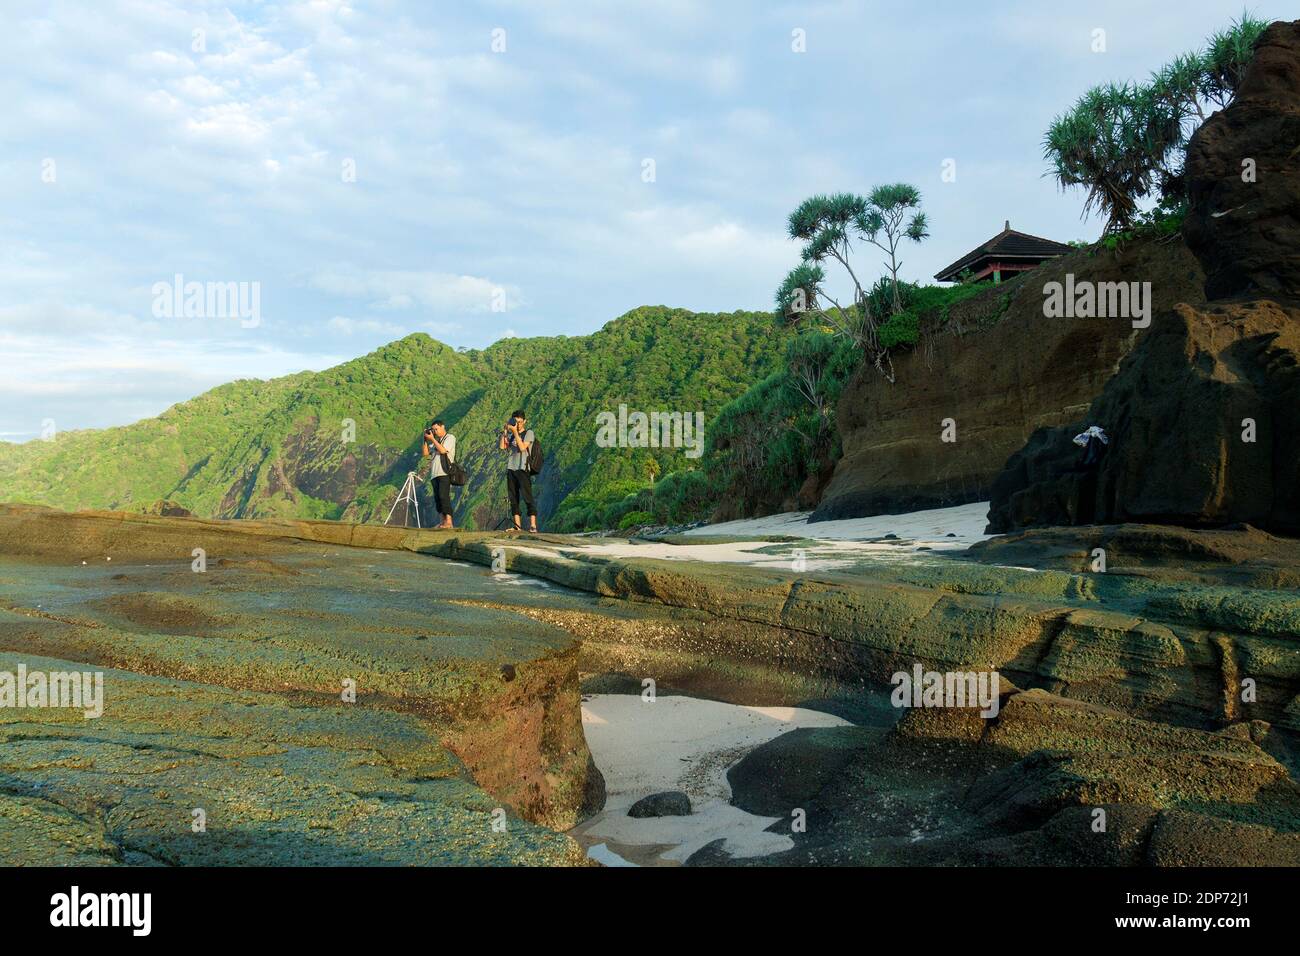 The tourists on Papuma beach, Jember. Stock Photo